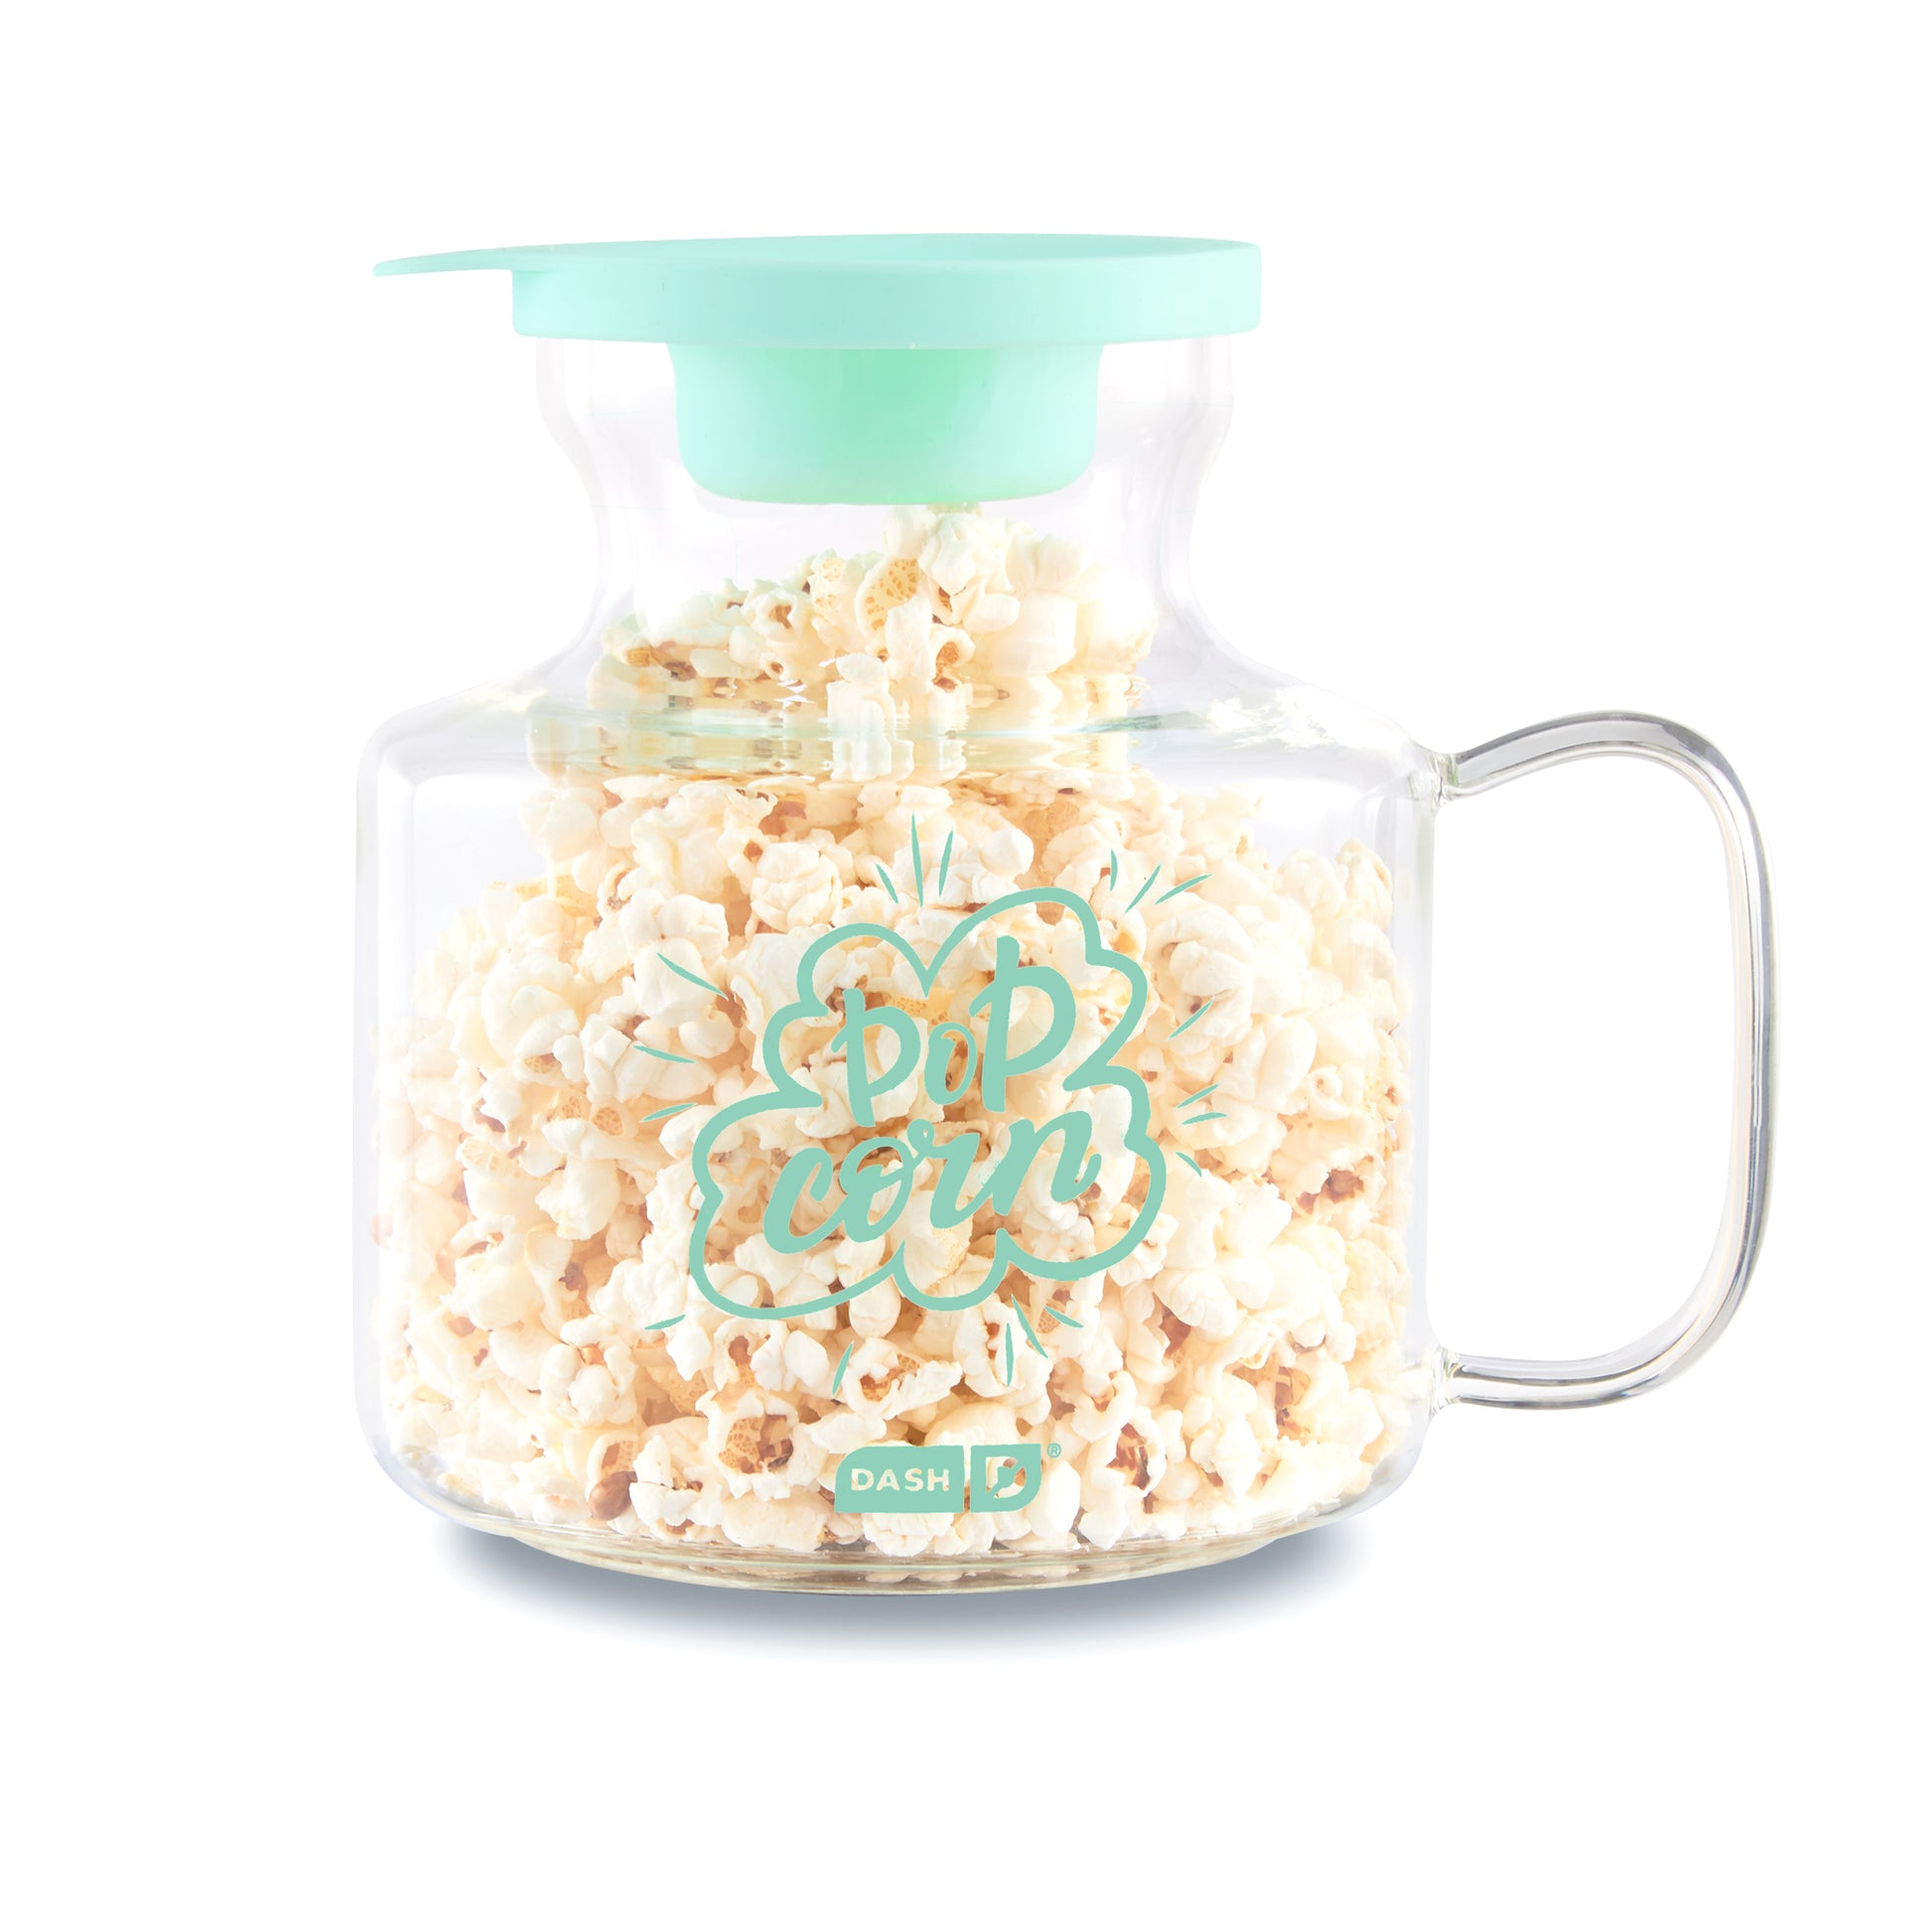  Dash Microwave Popcorn Popper for Fresh Movie Theater